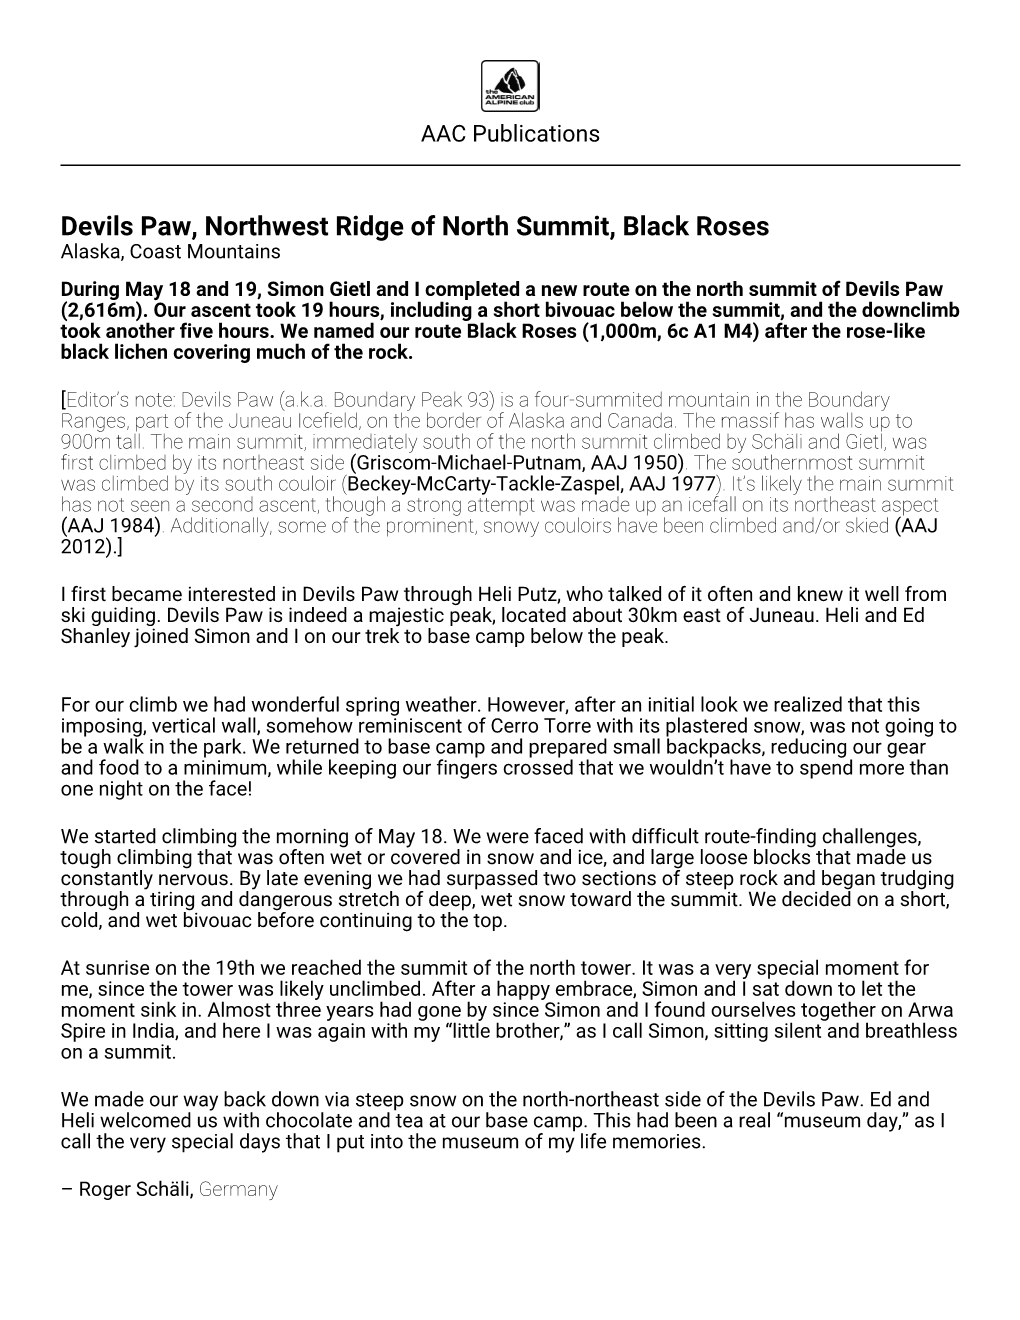 Devils Paw, Northwest Ridge of North Summit, Black Roses